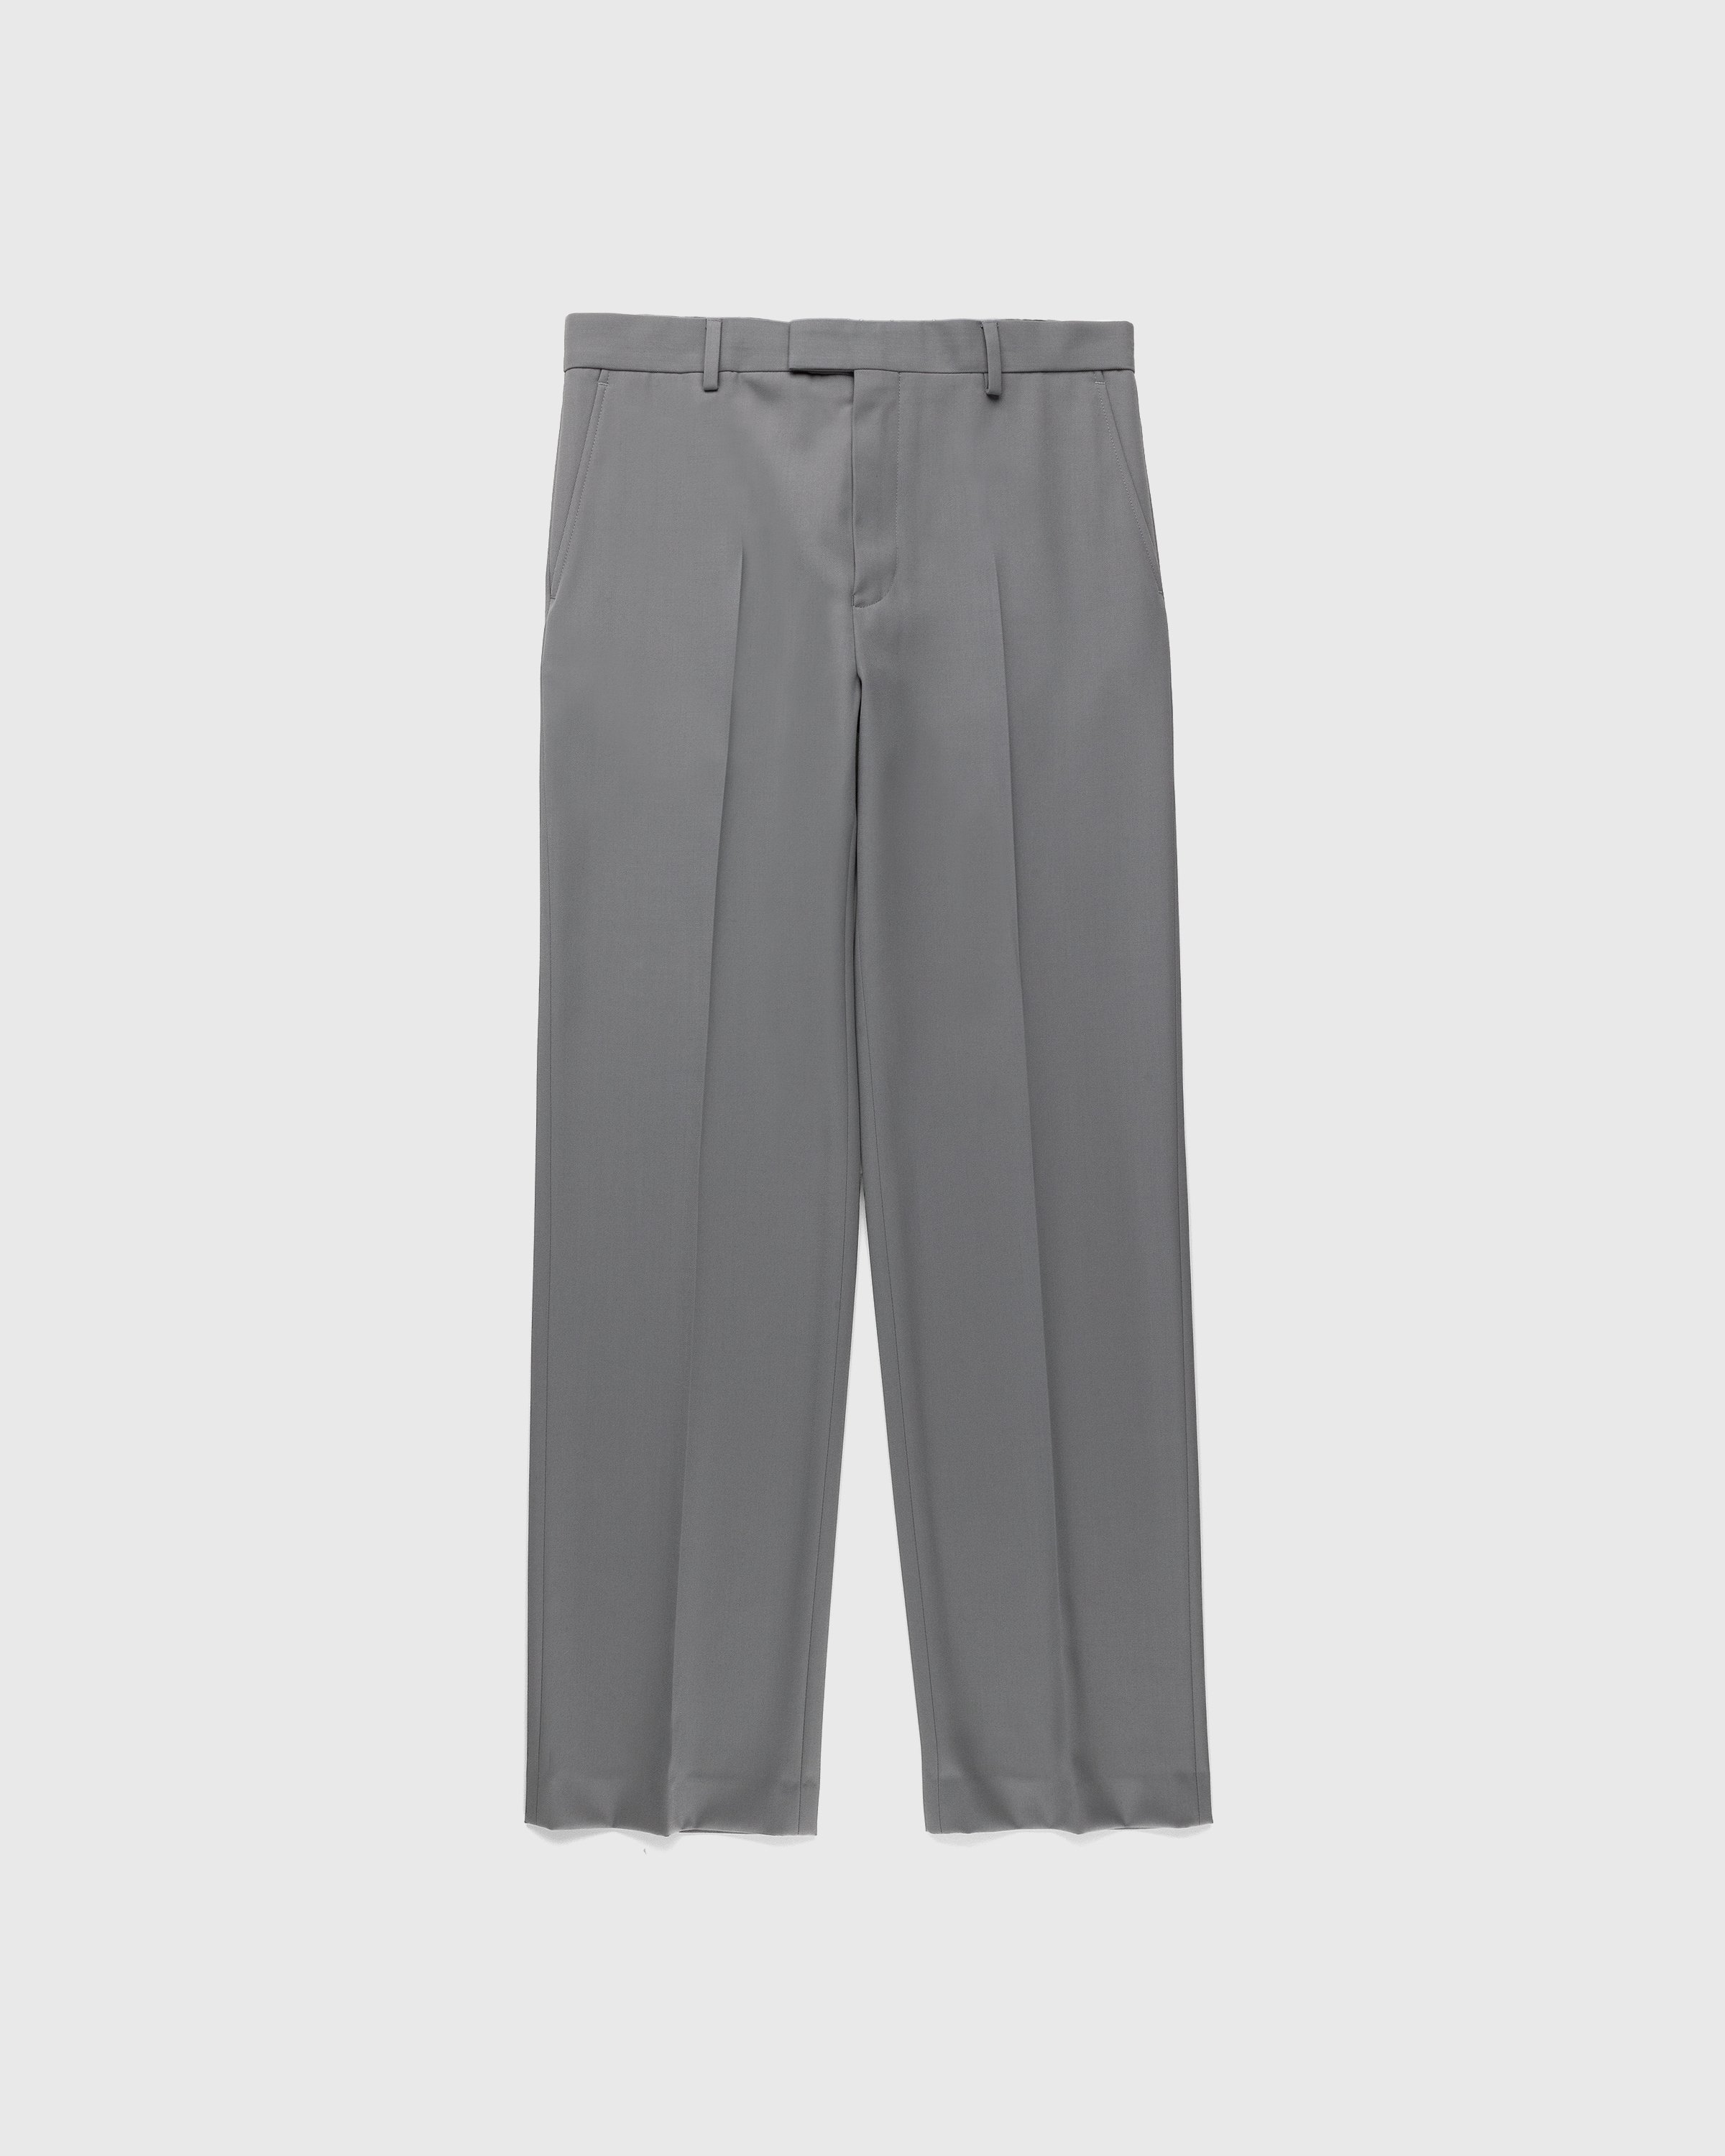 Dries van Noten - Pinnet Long Pants Grey - Clothing - Grey - Image 1